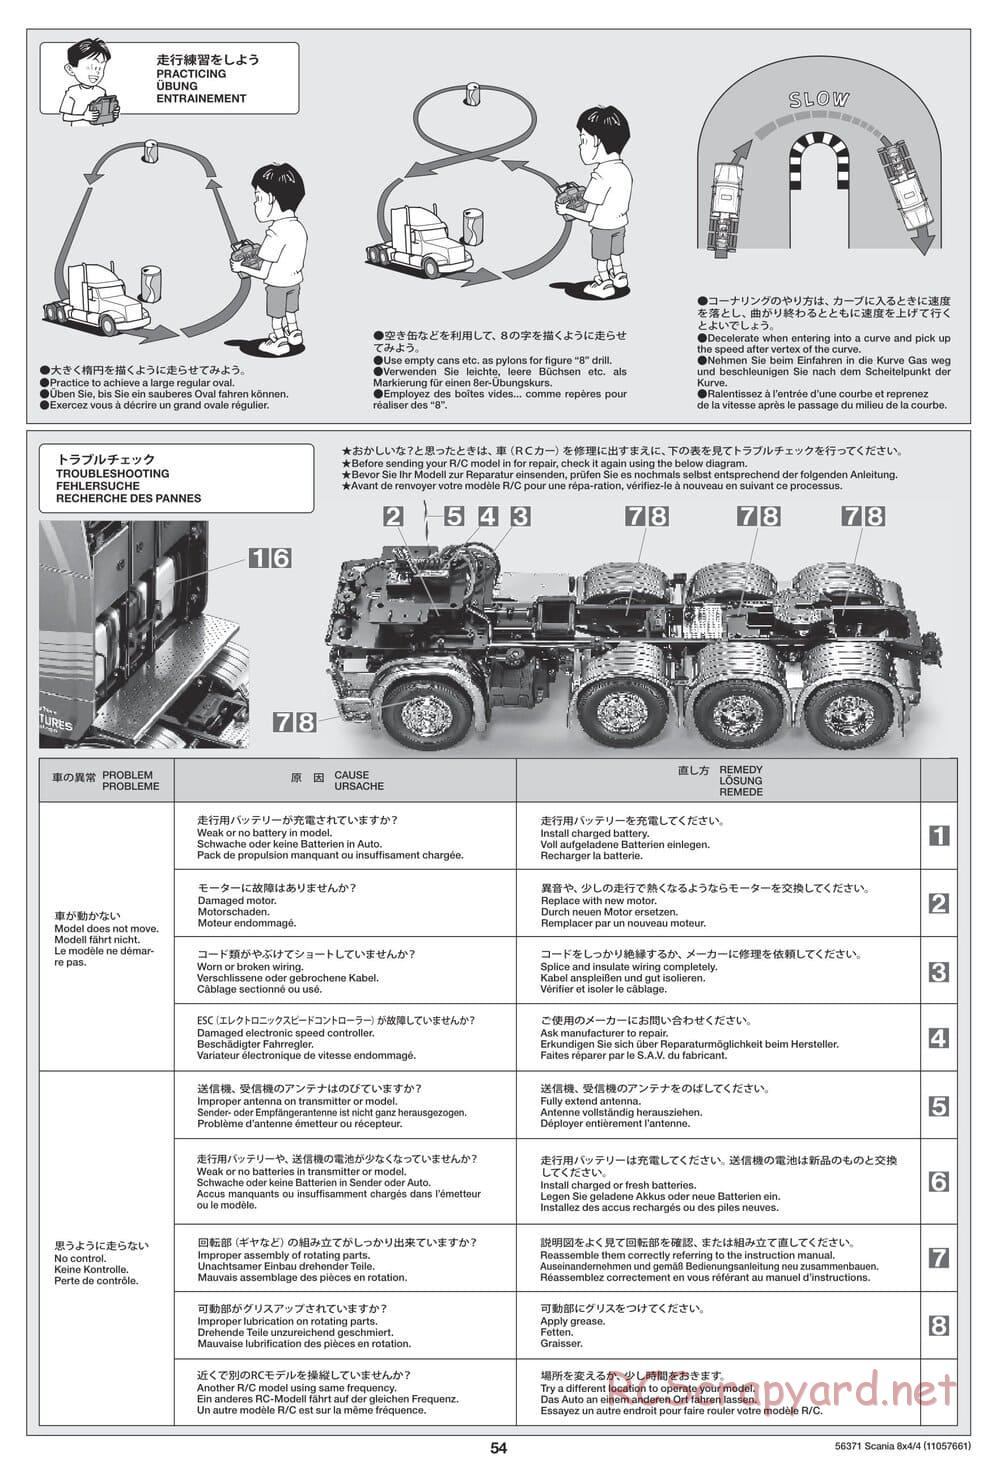 Tamiya - Scania 770 S 8x4/4 Chassis - Manual - Page 54